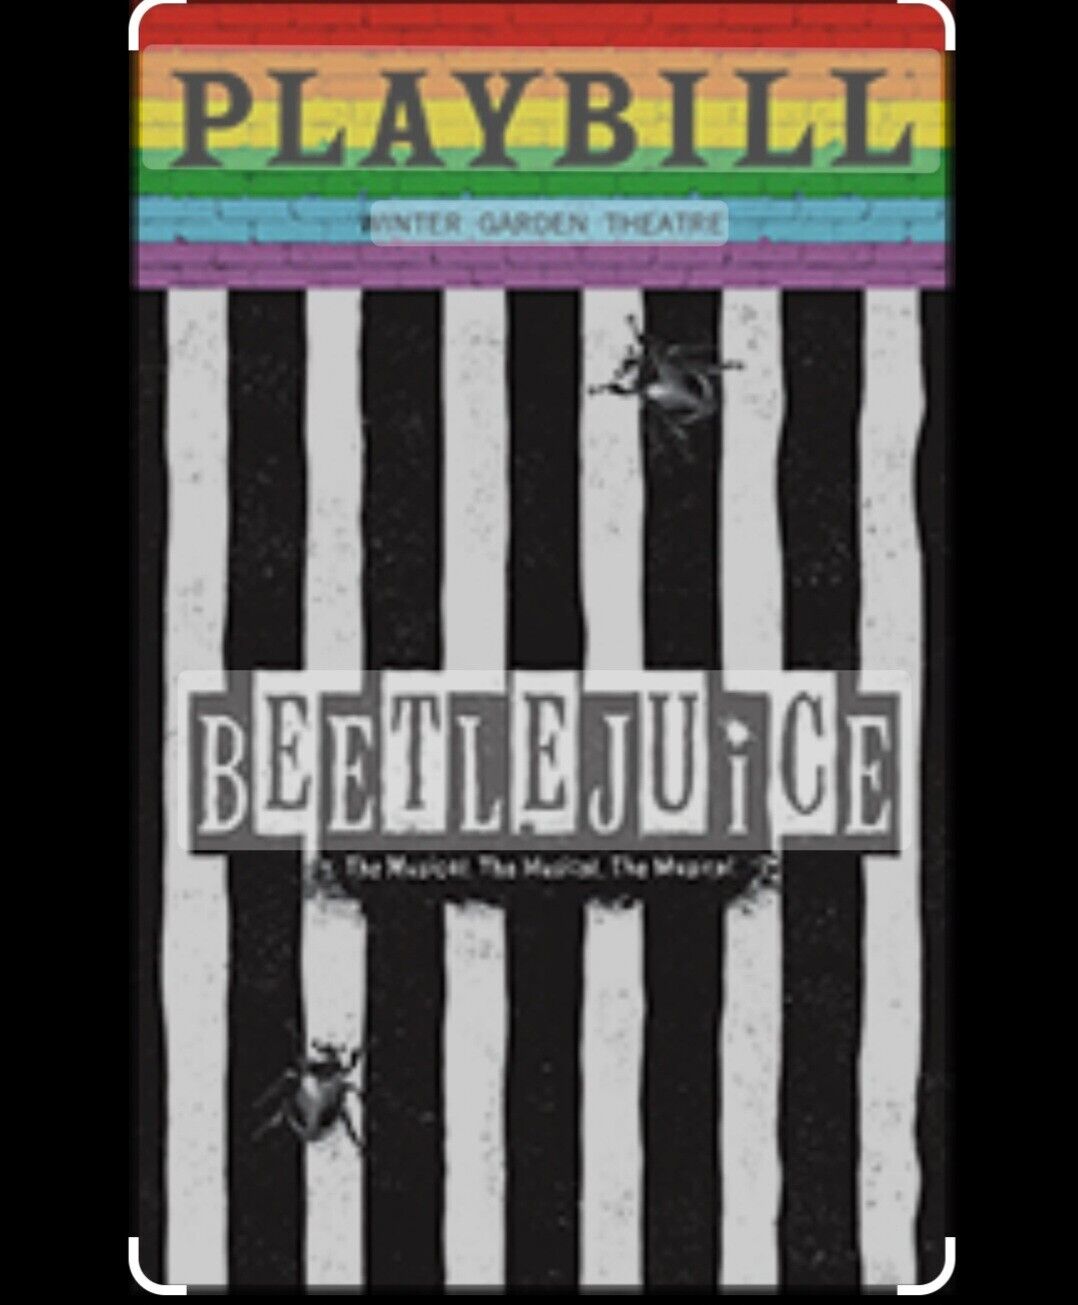 Beetlejuice Tickets